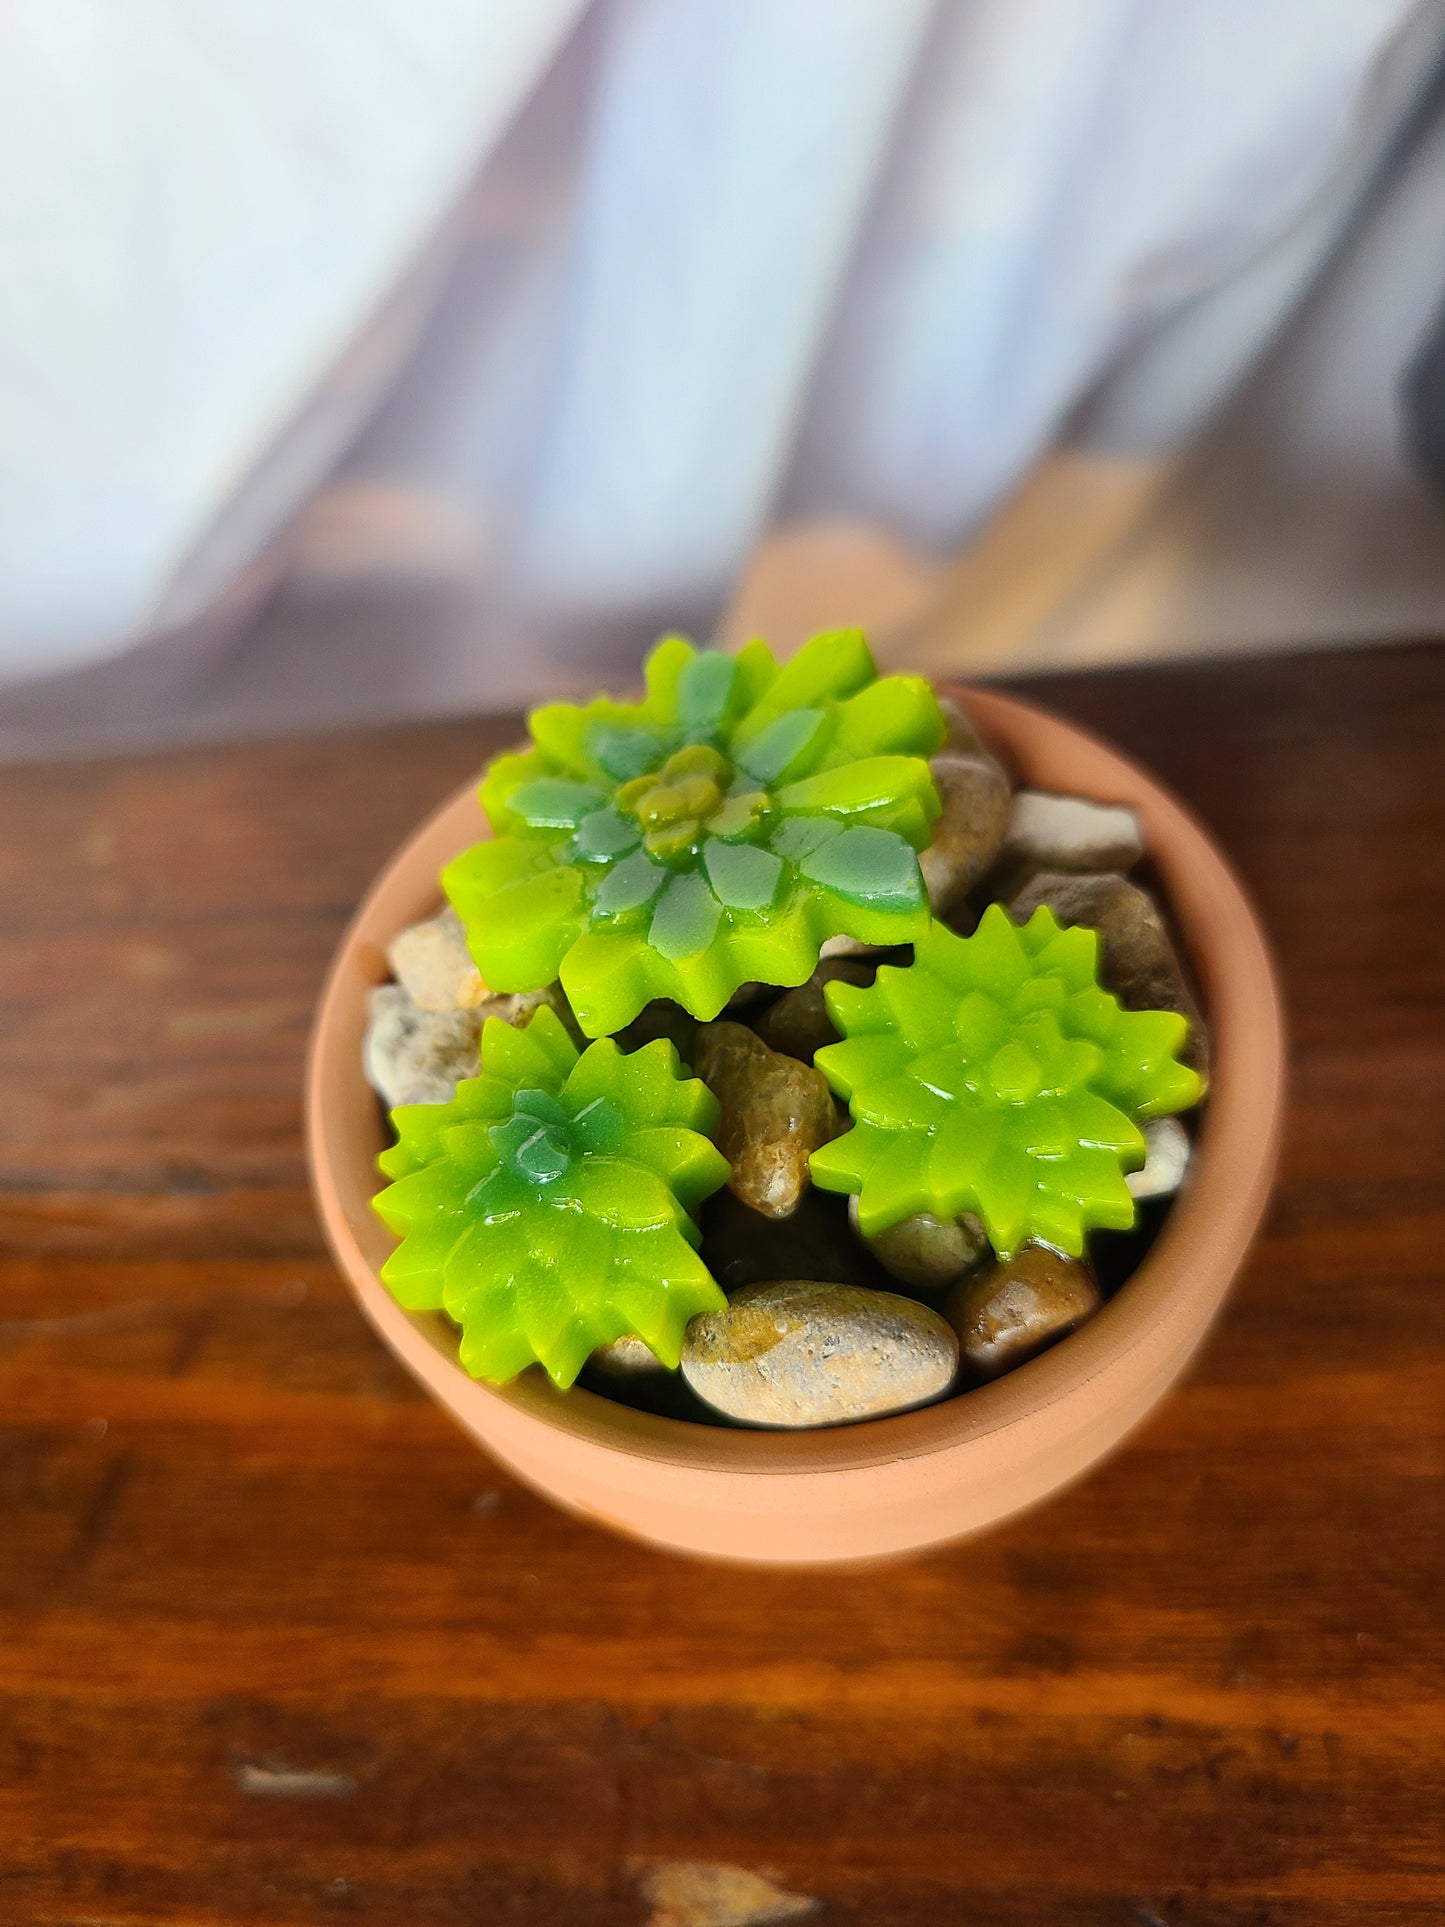 Glass Succulents with Terra Cotta Pot